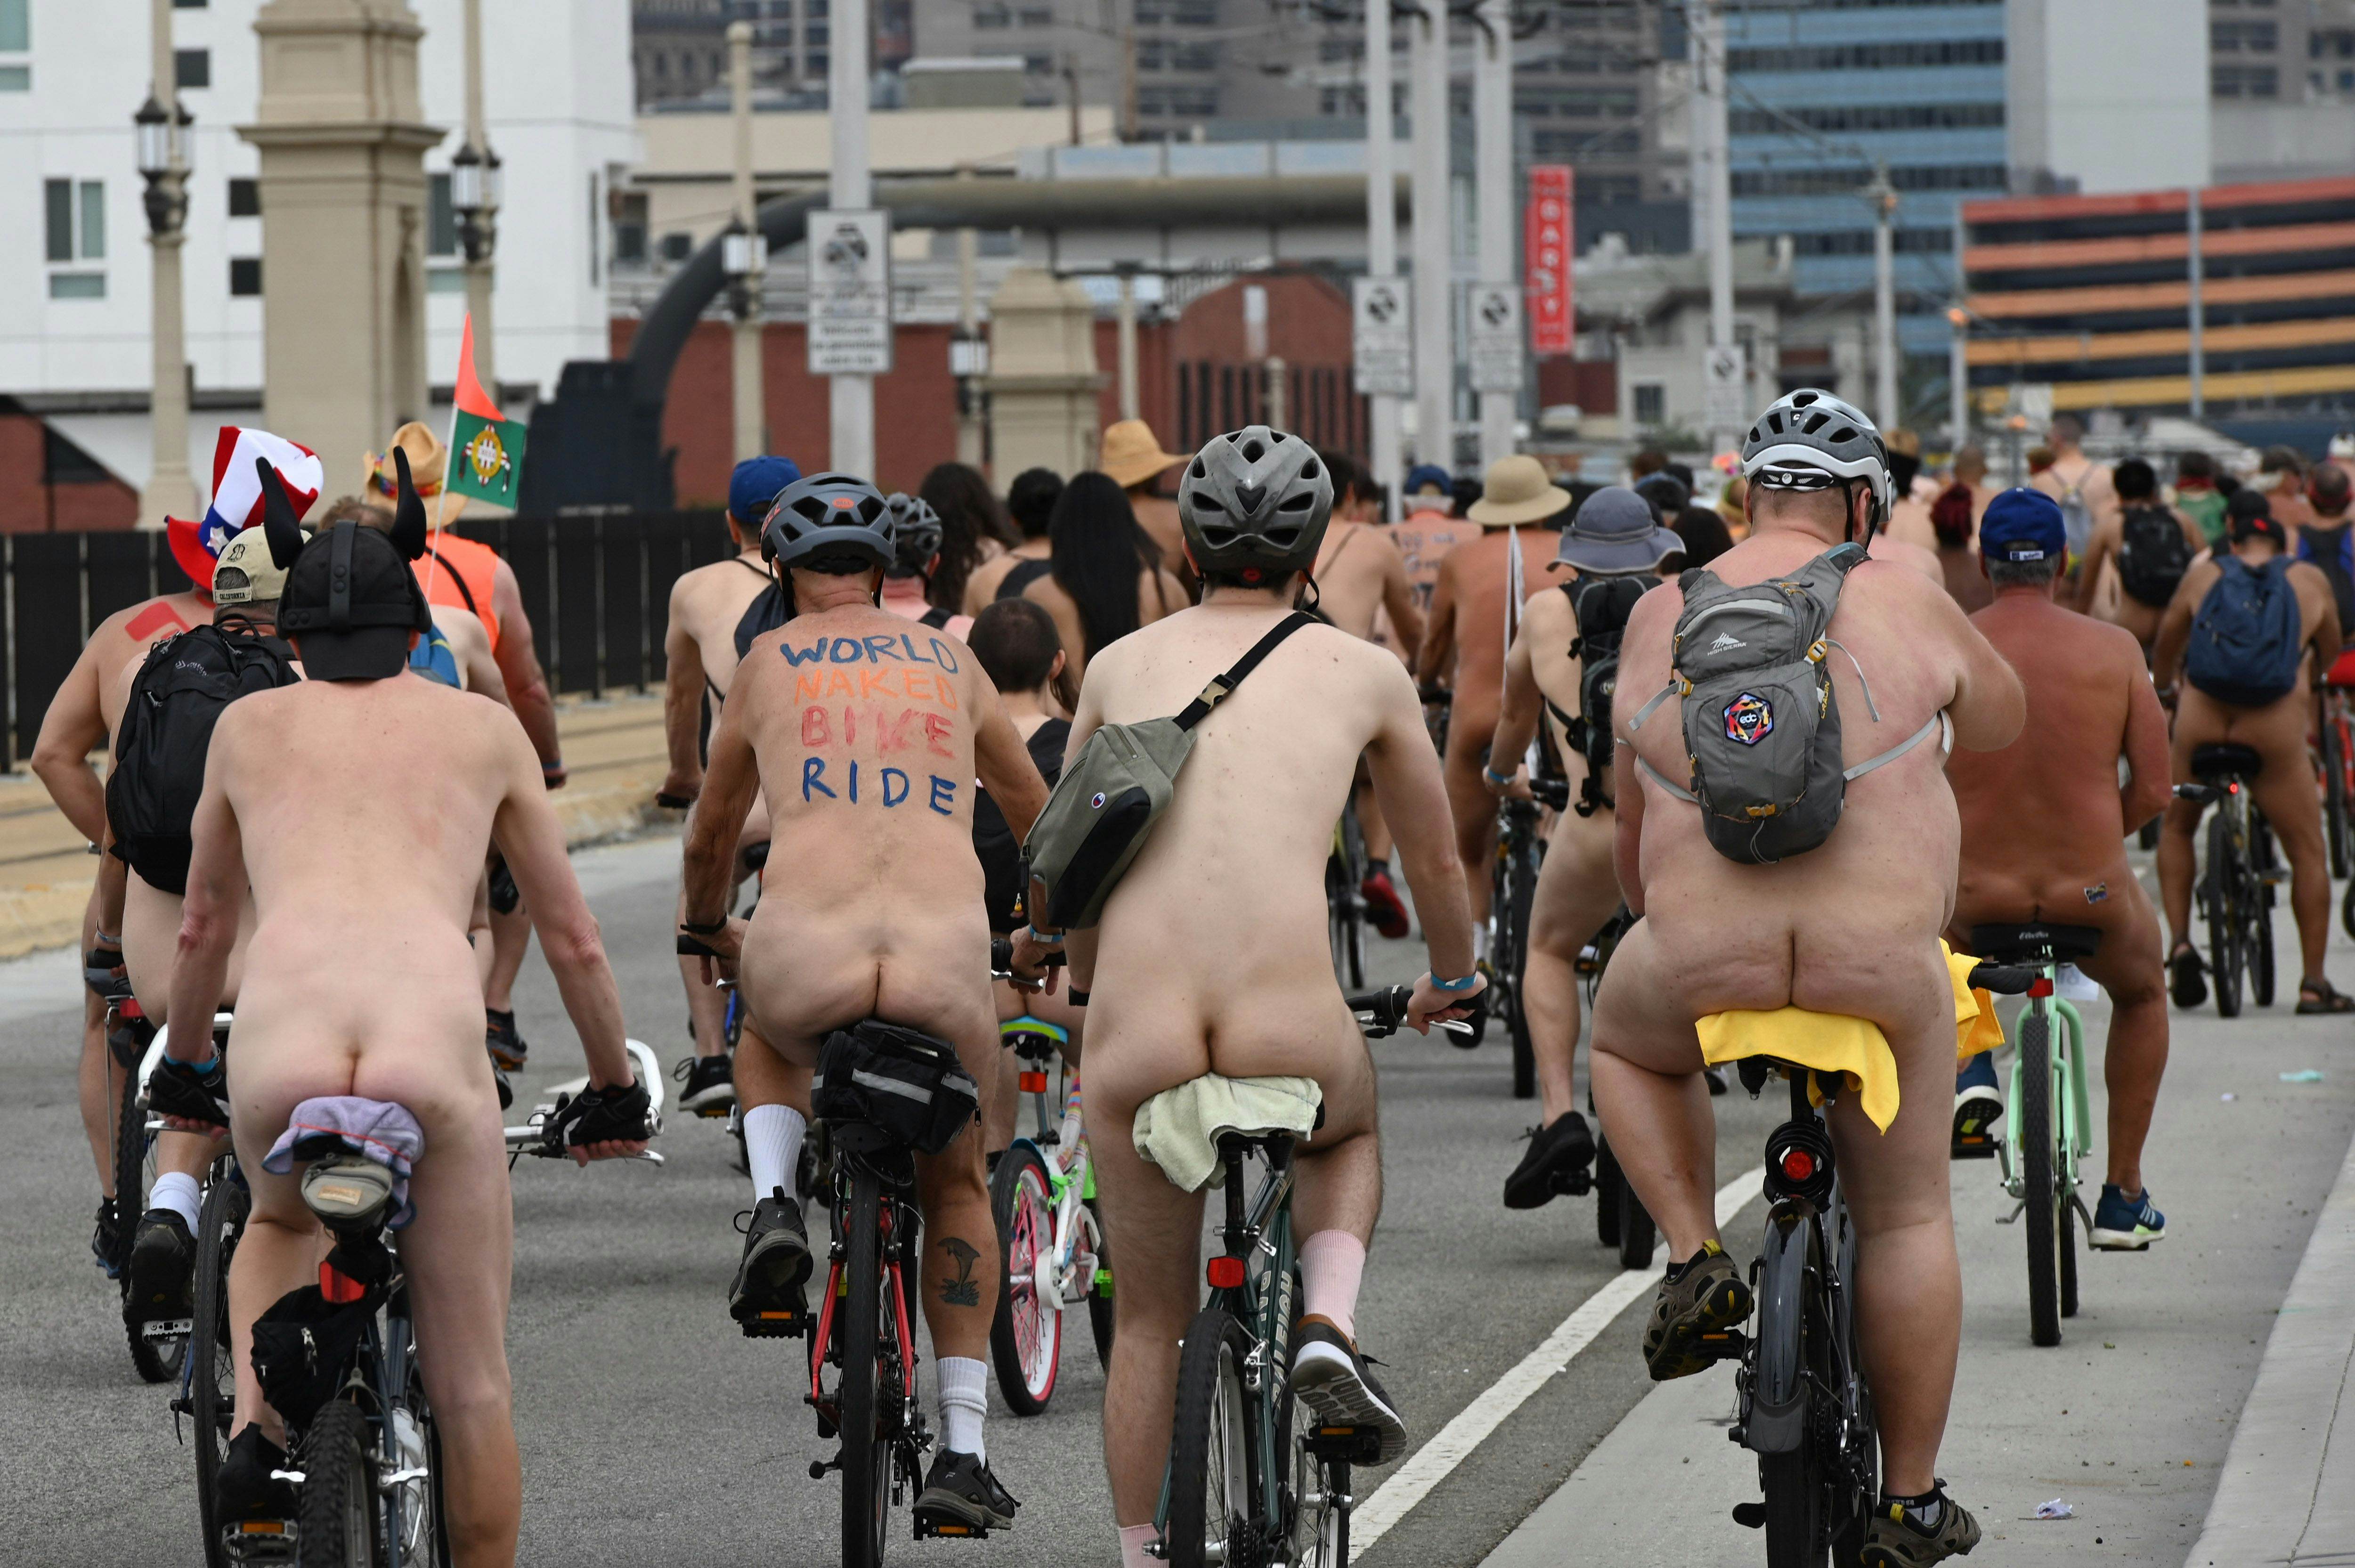 Feeling Free: Daring Public Nudity Photos